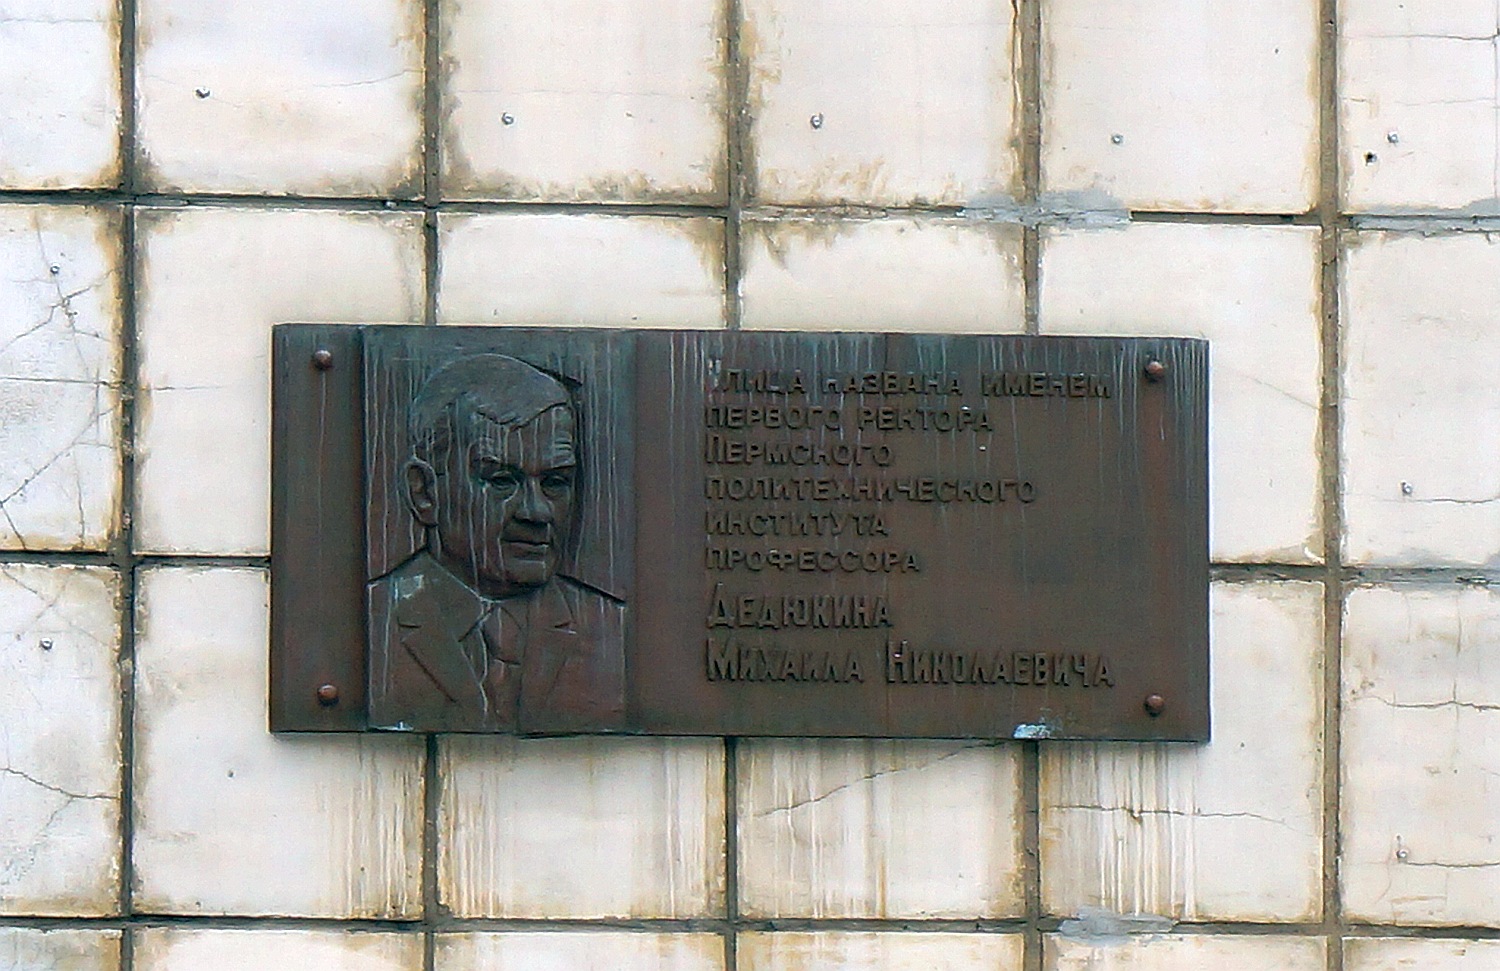 Perm, Улица Профессора Дедюкина, 22. Perm — Memorial plaques